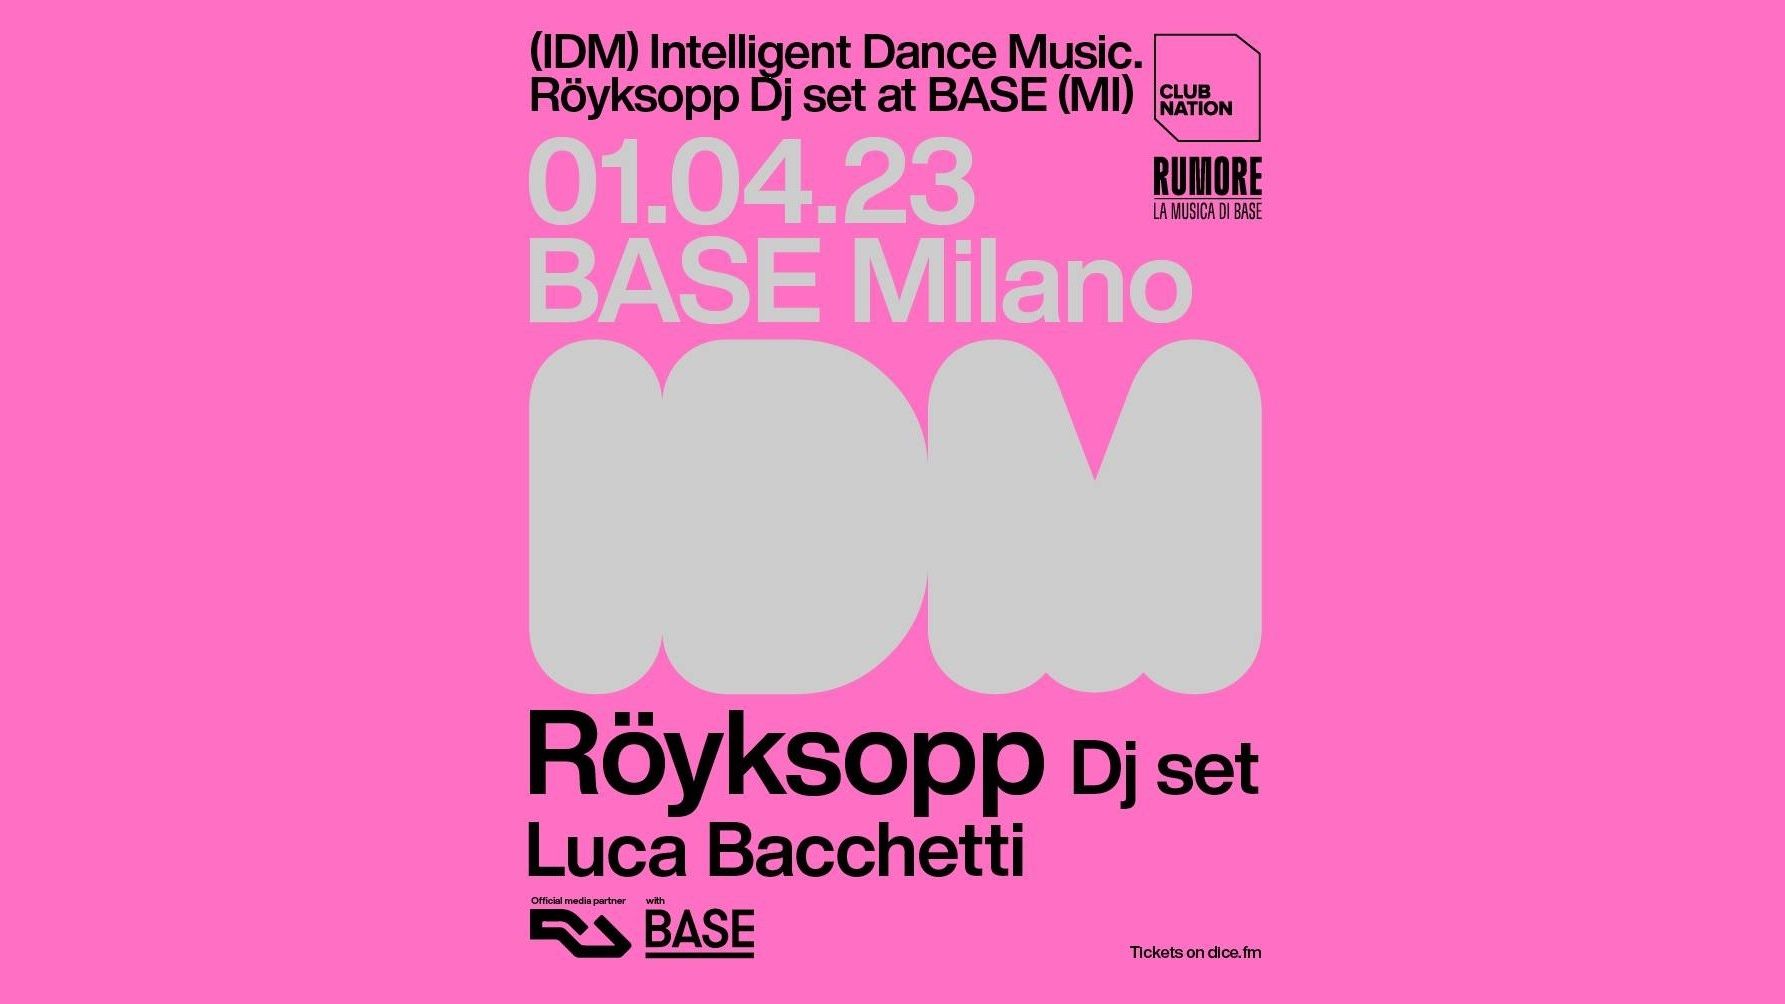 (IDM) Röyksopp Dj set + Luca Bacchetti